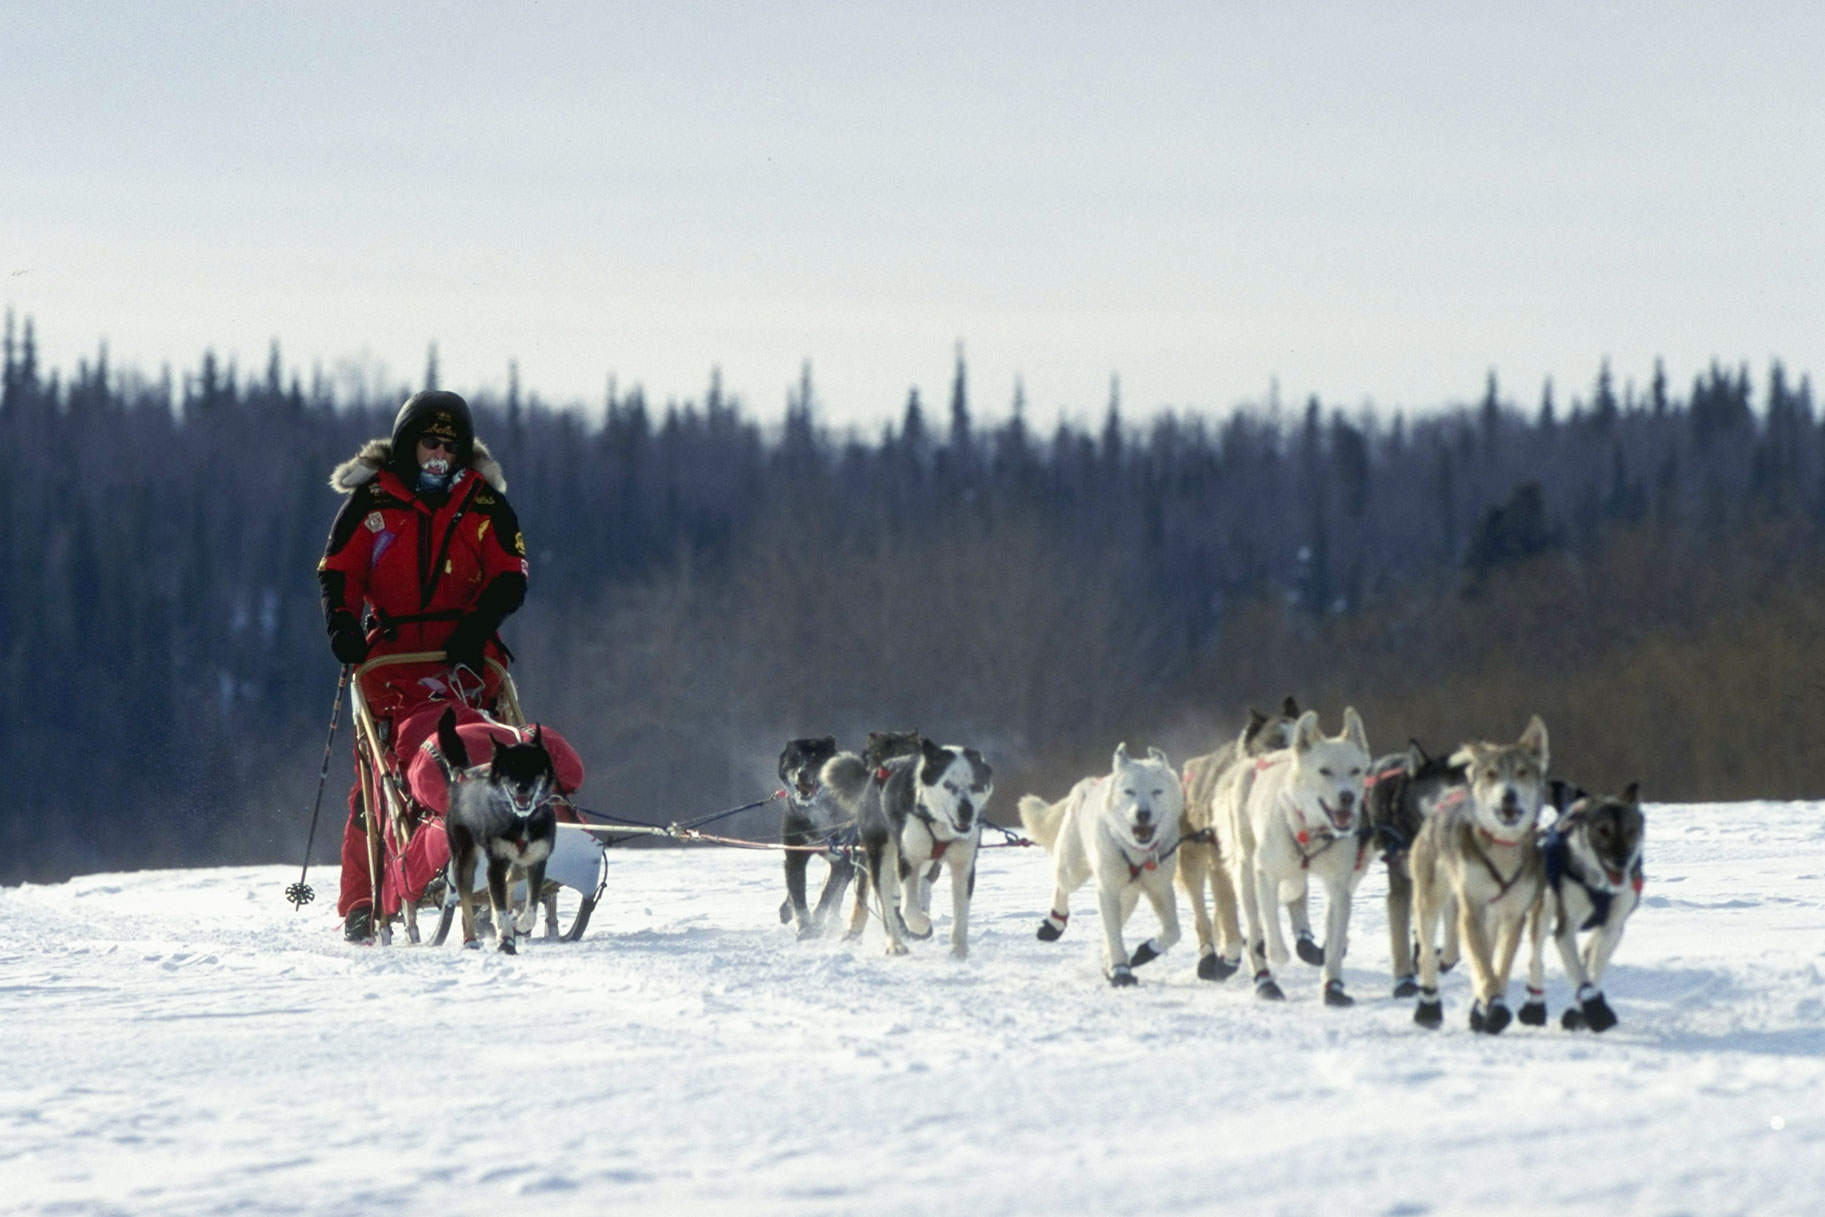 Iditarod sledder with their dogs